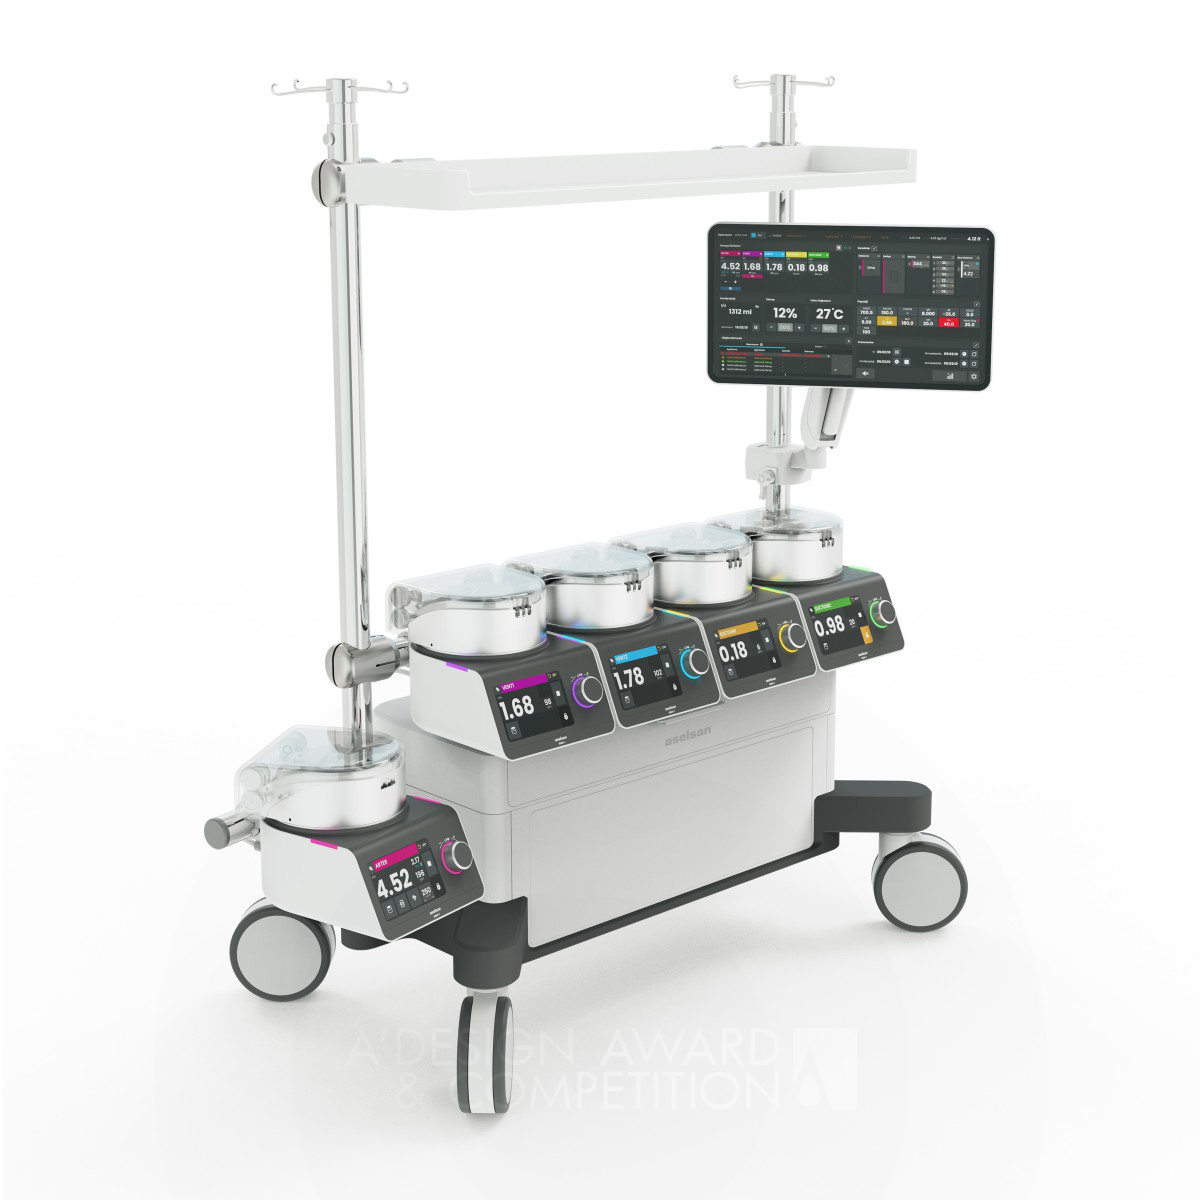 Aselsan Hlm Heart Lung Machine by Eren Donertas Golden Medical Devices and Medical Equipment Design Award Winner 2023 